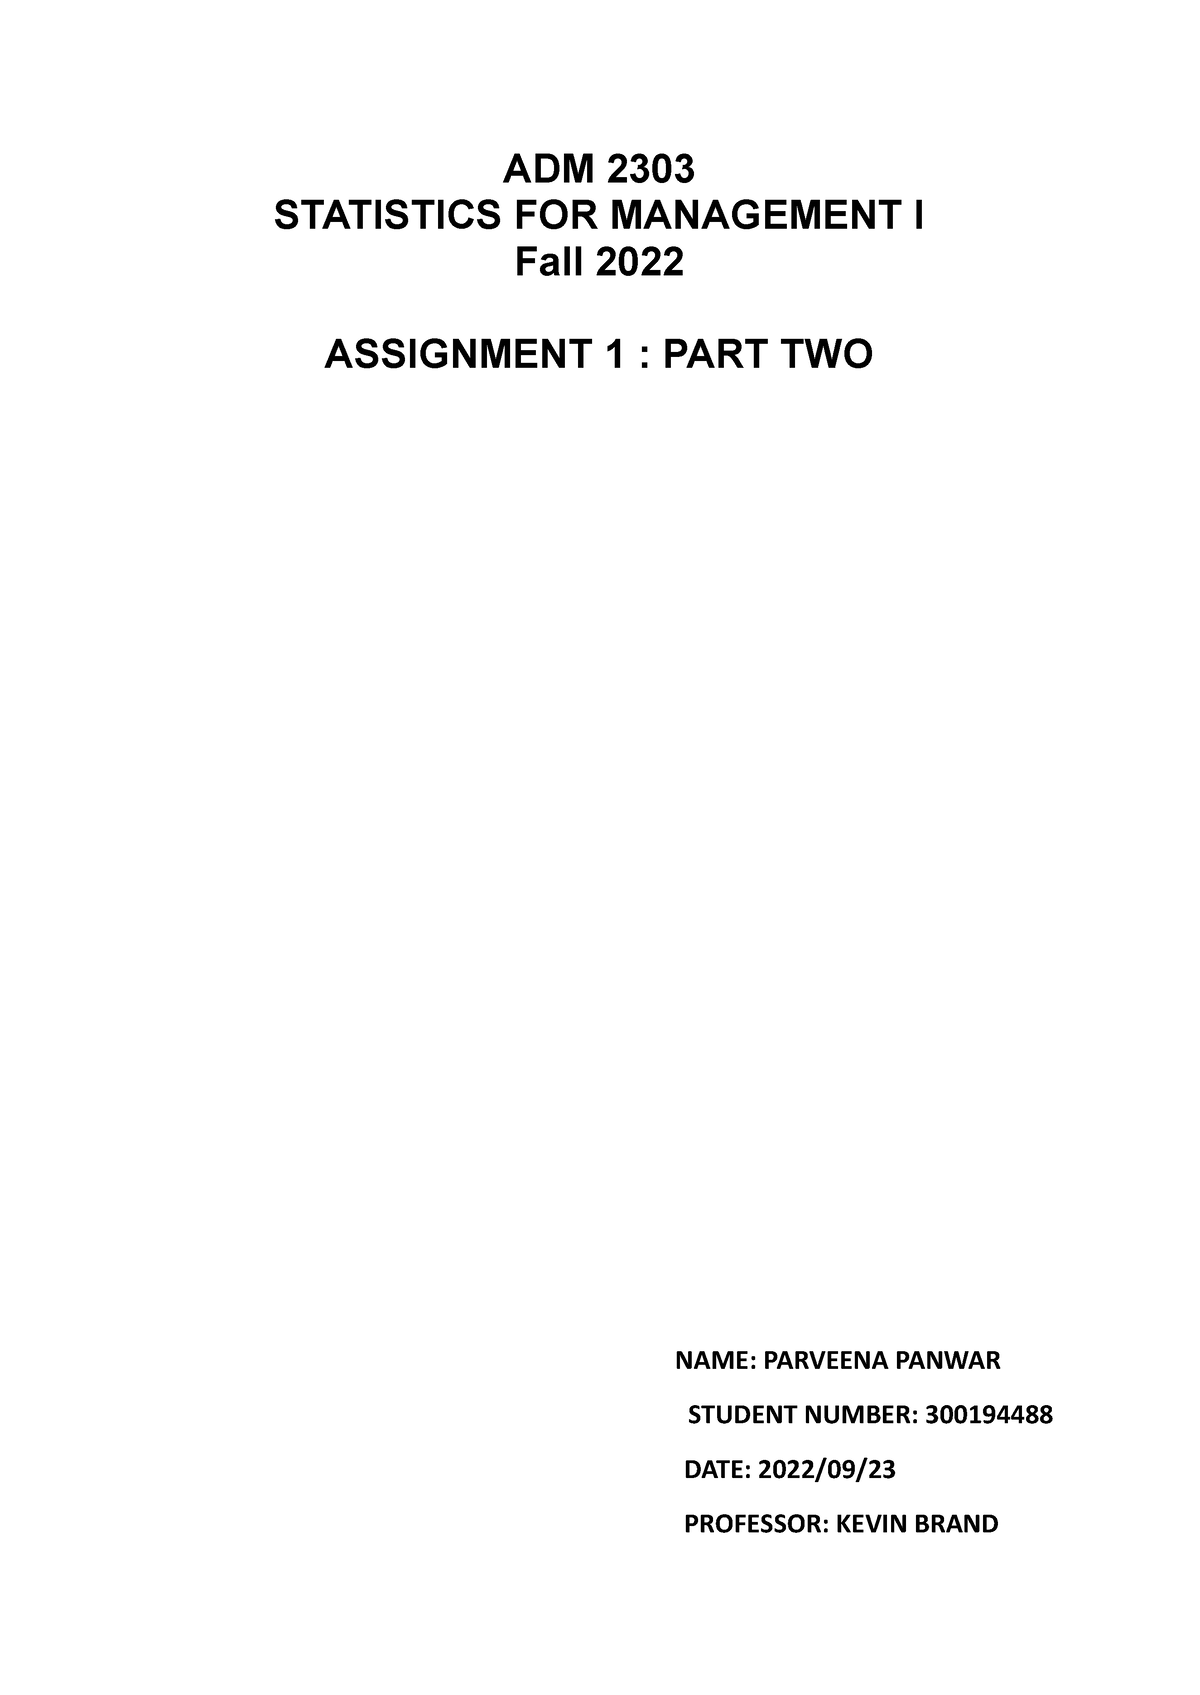 statistics for management assignment